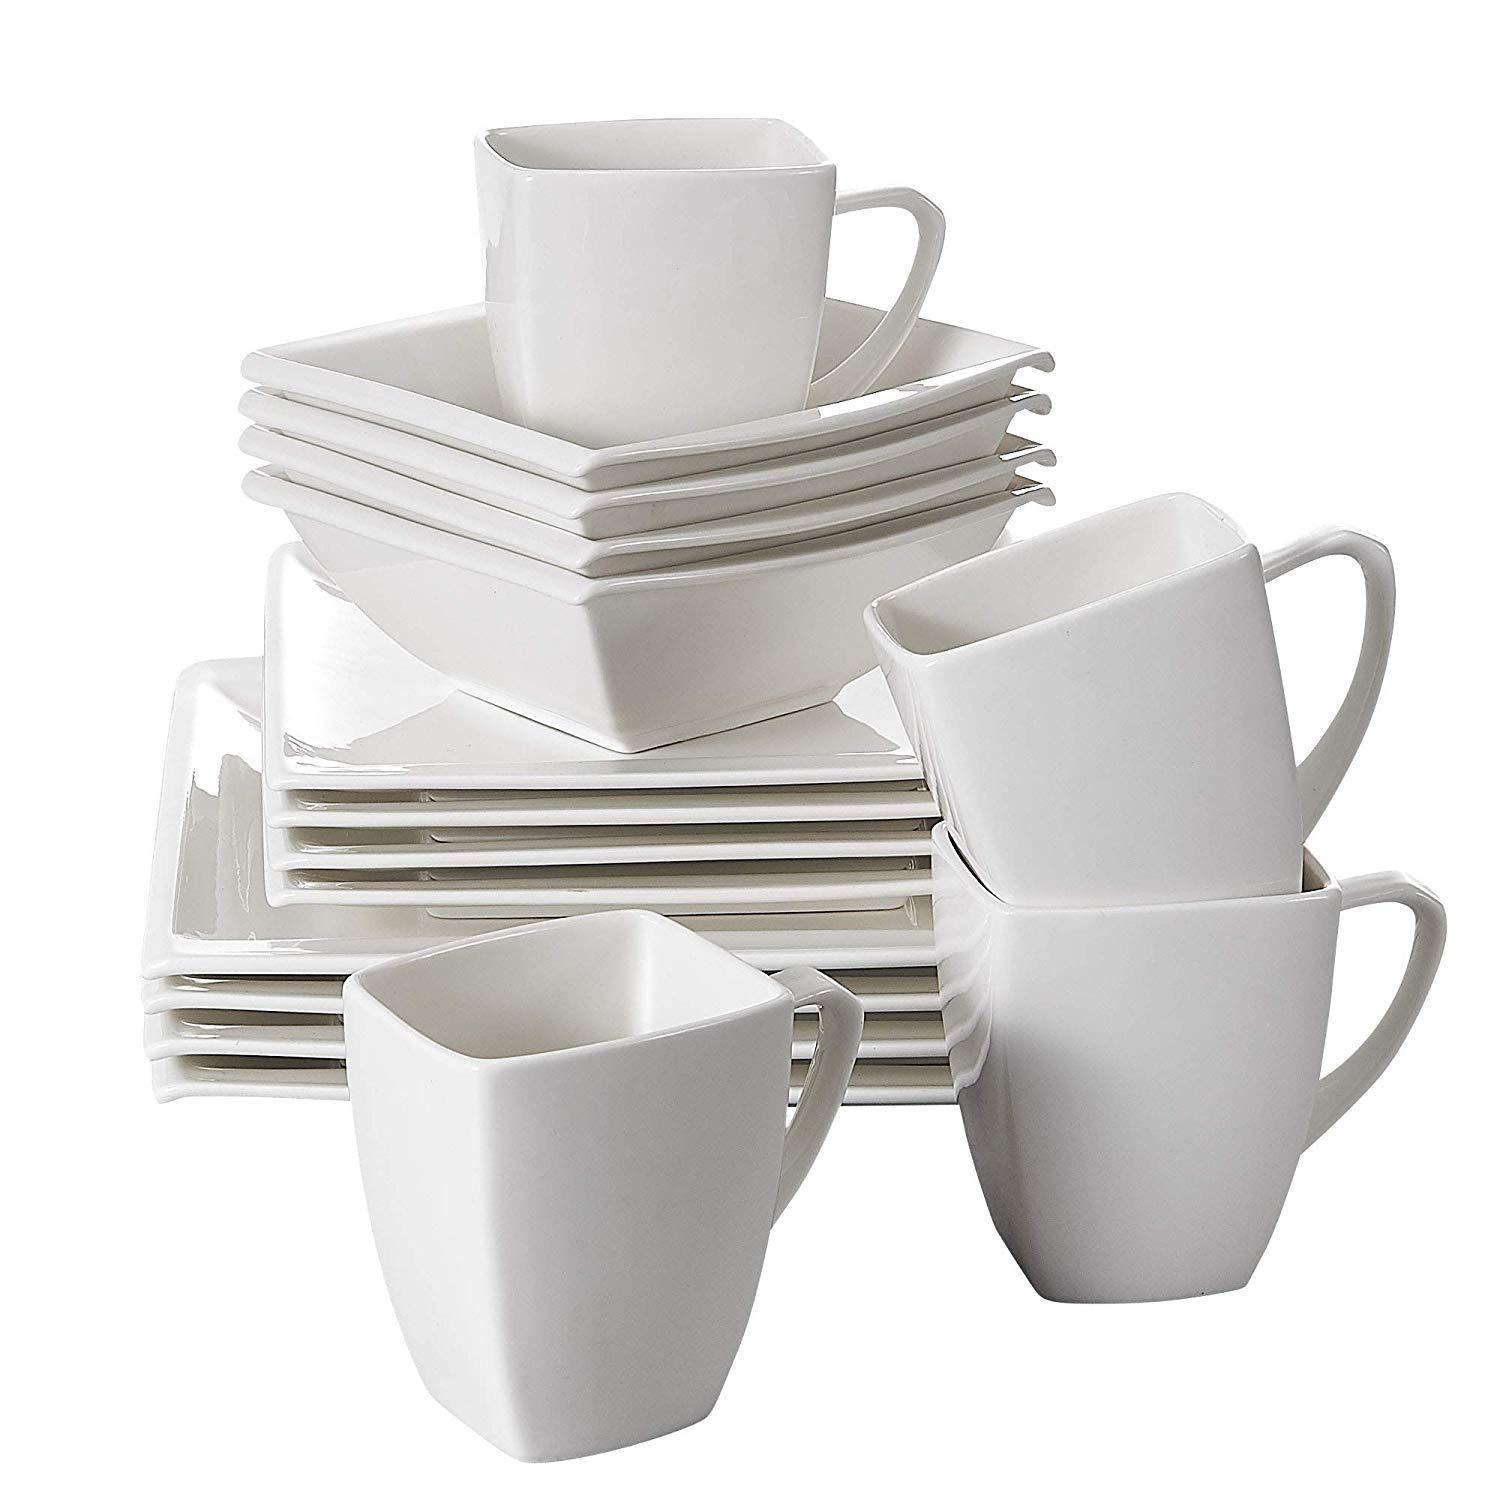 MALACASA Blance 16-Piece Bowls & Plates Set Porcelain